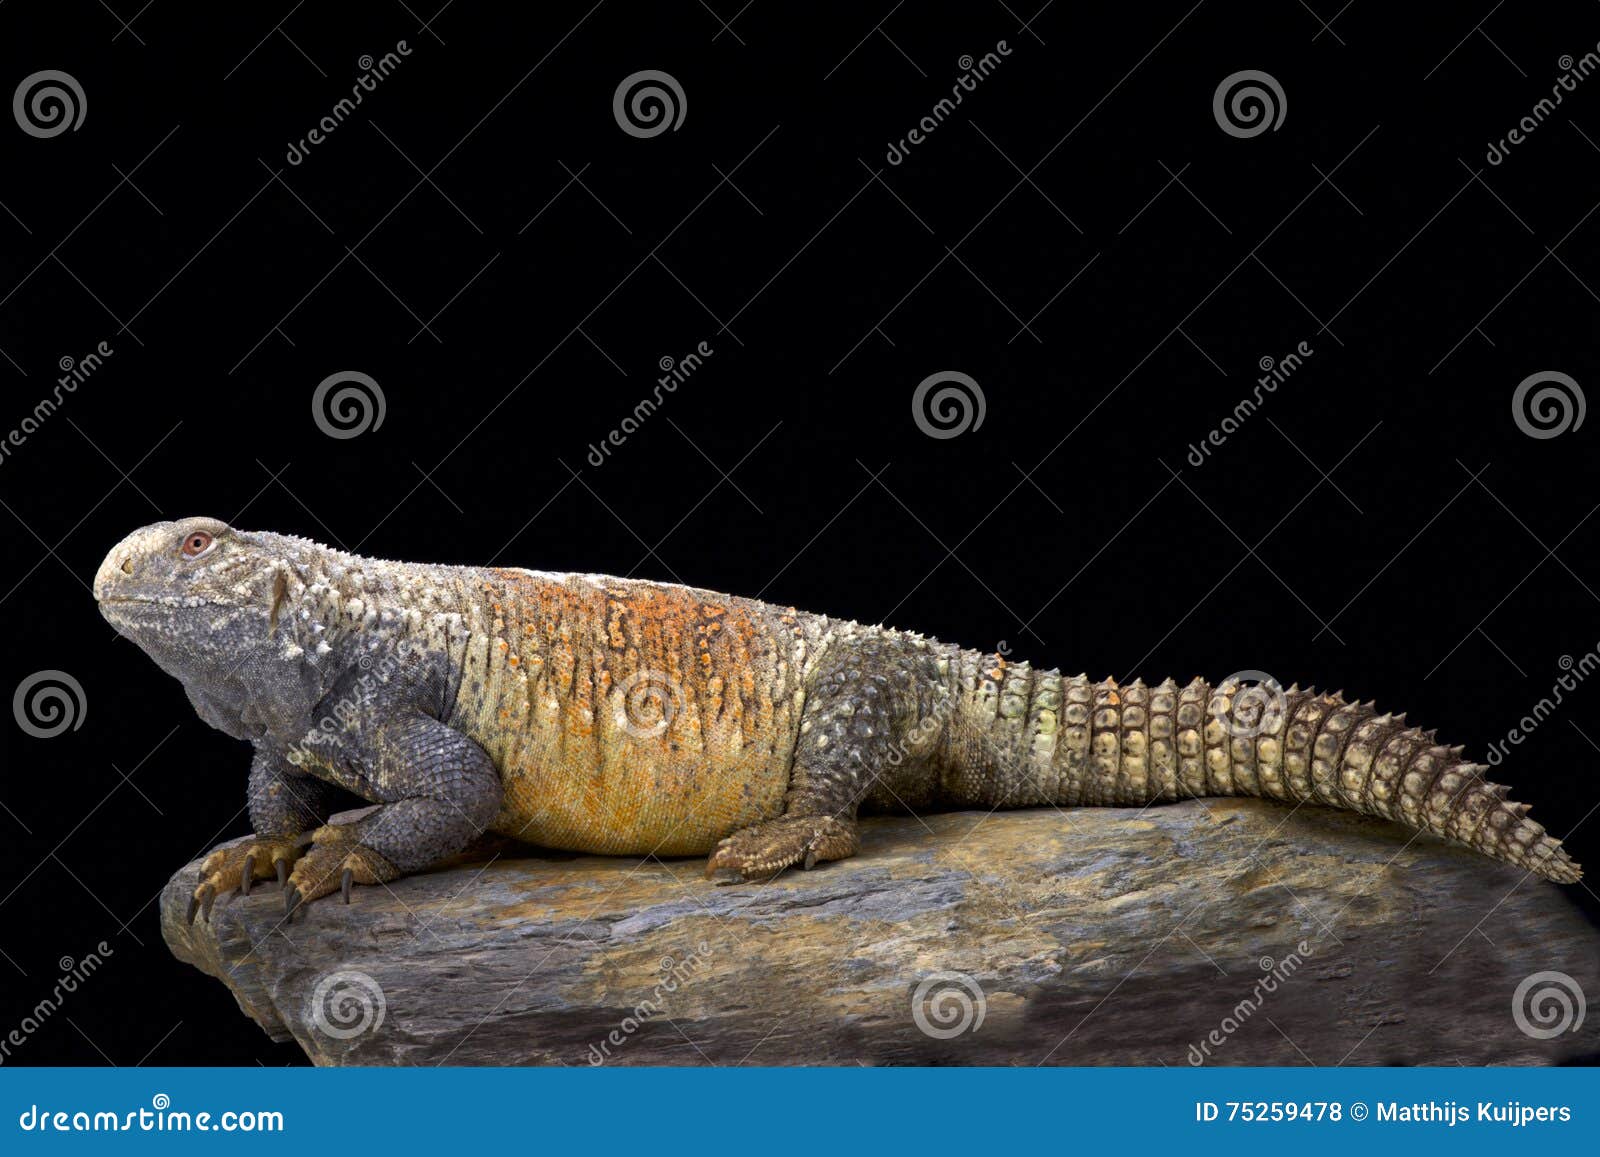 iraqi spiny-tailed lizard (saara loricata)